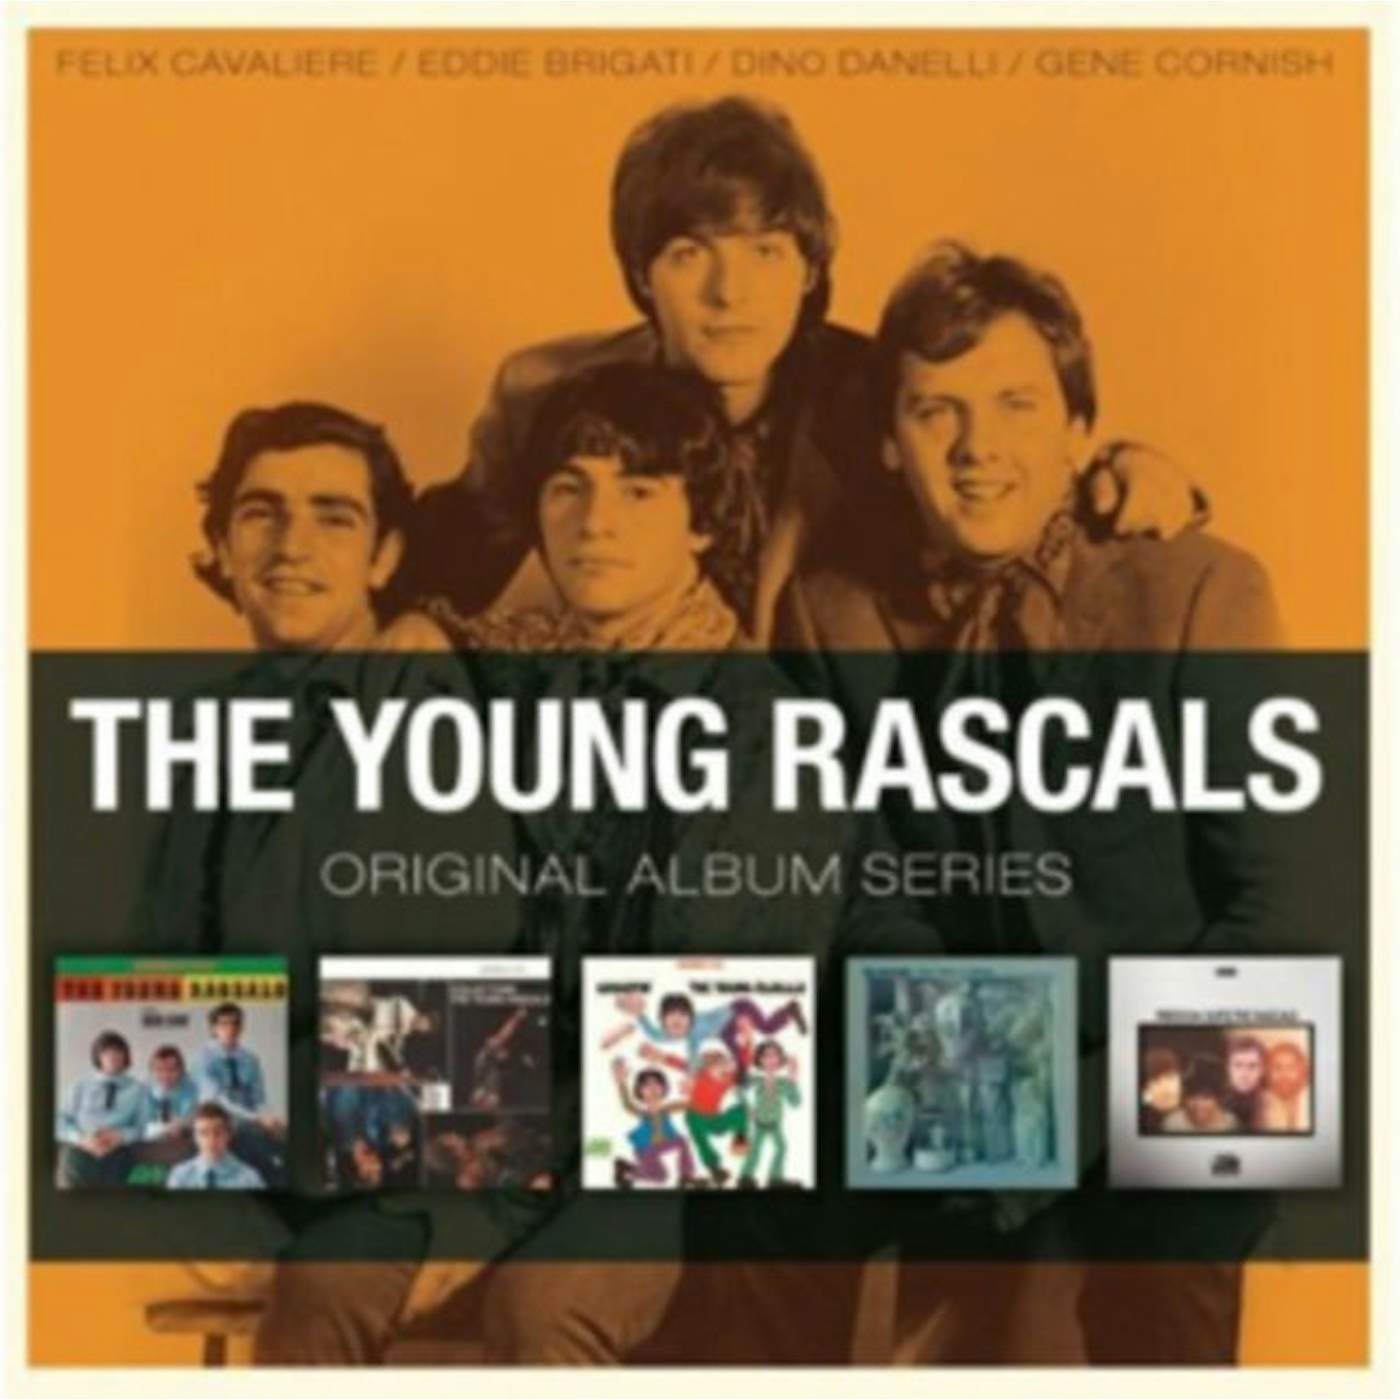 The Young Rascals CD - Original Album Series